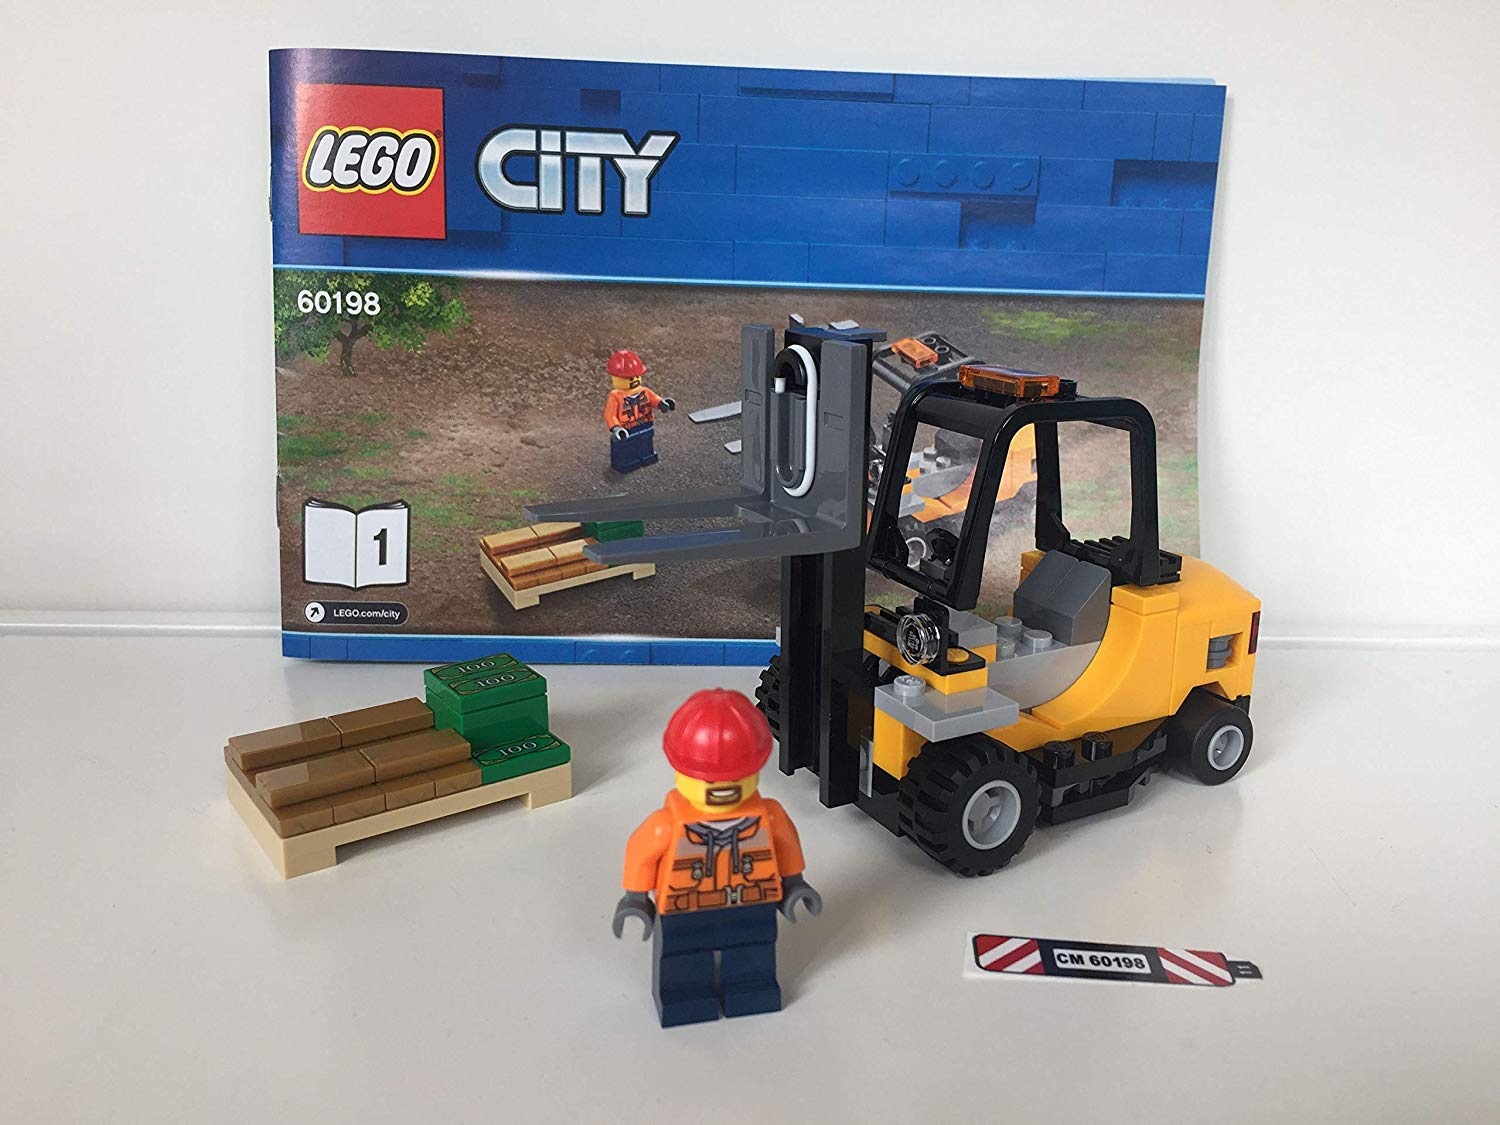 Genuine Lego City Forklift – 60198